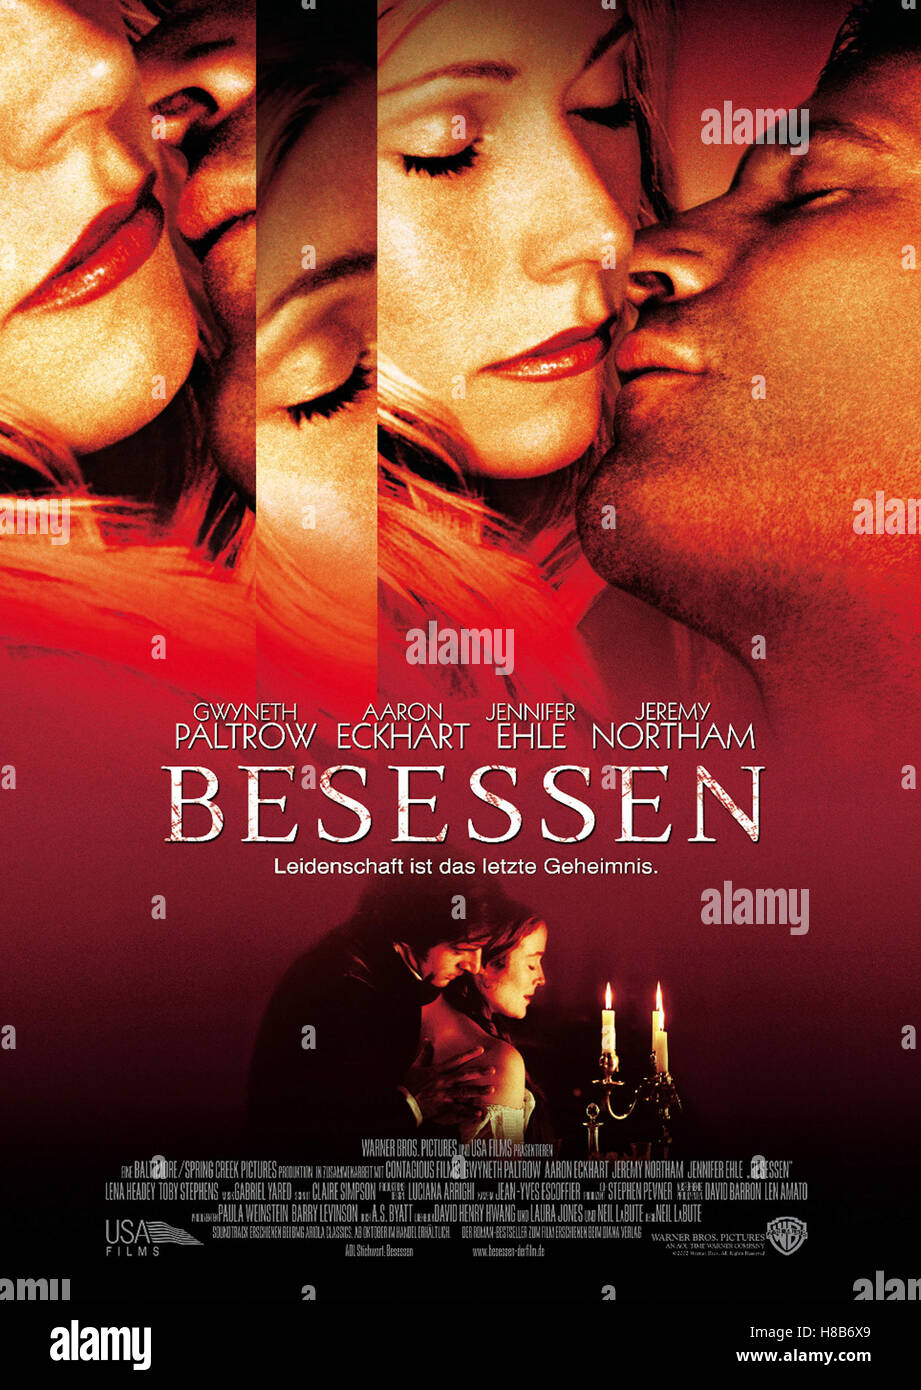 Besessen, (POSSESSION) USA 2002, Regie: Neil LaBute, GWYNETH PALTROW, AARON ECKHART, Stichwort: Plakat Stock Photo